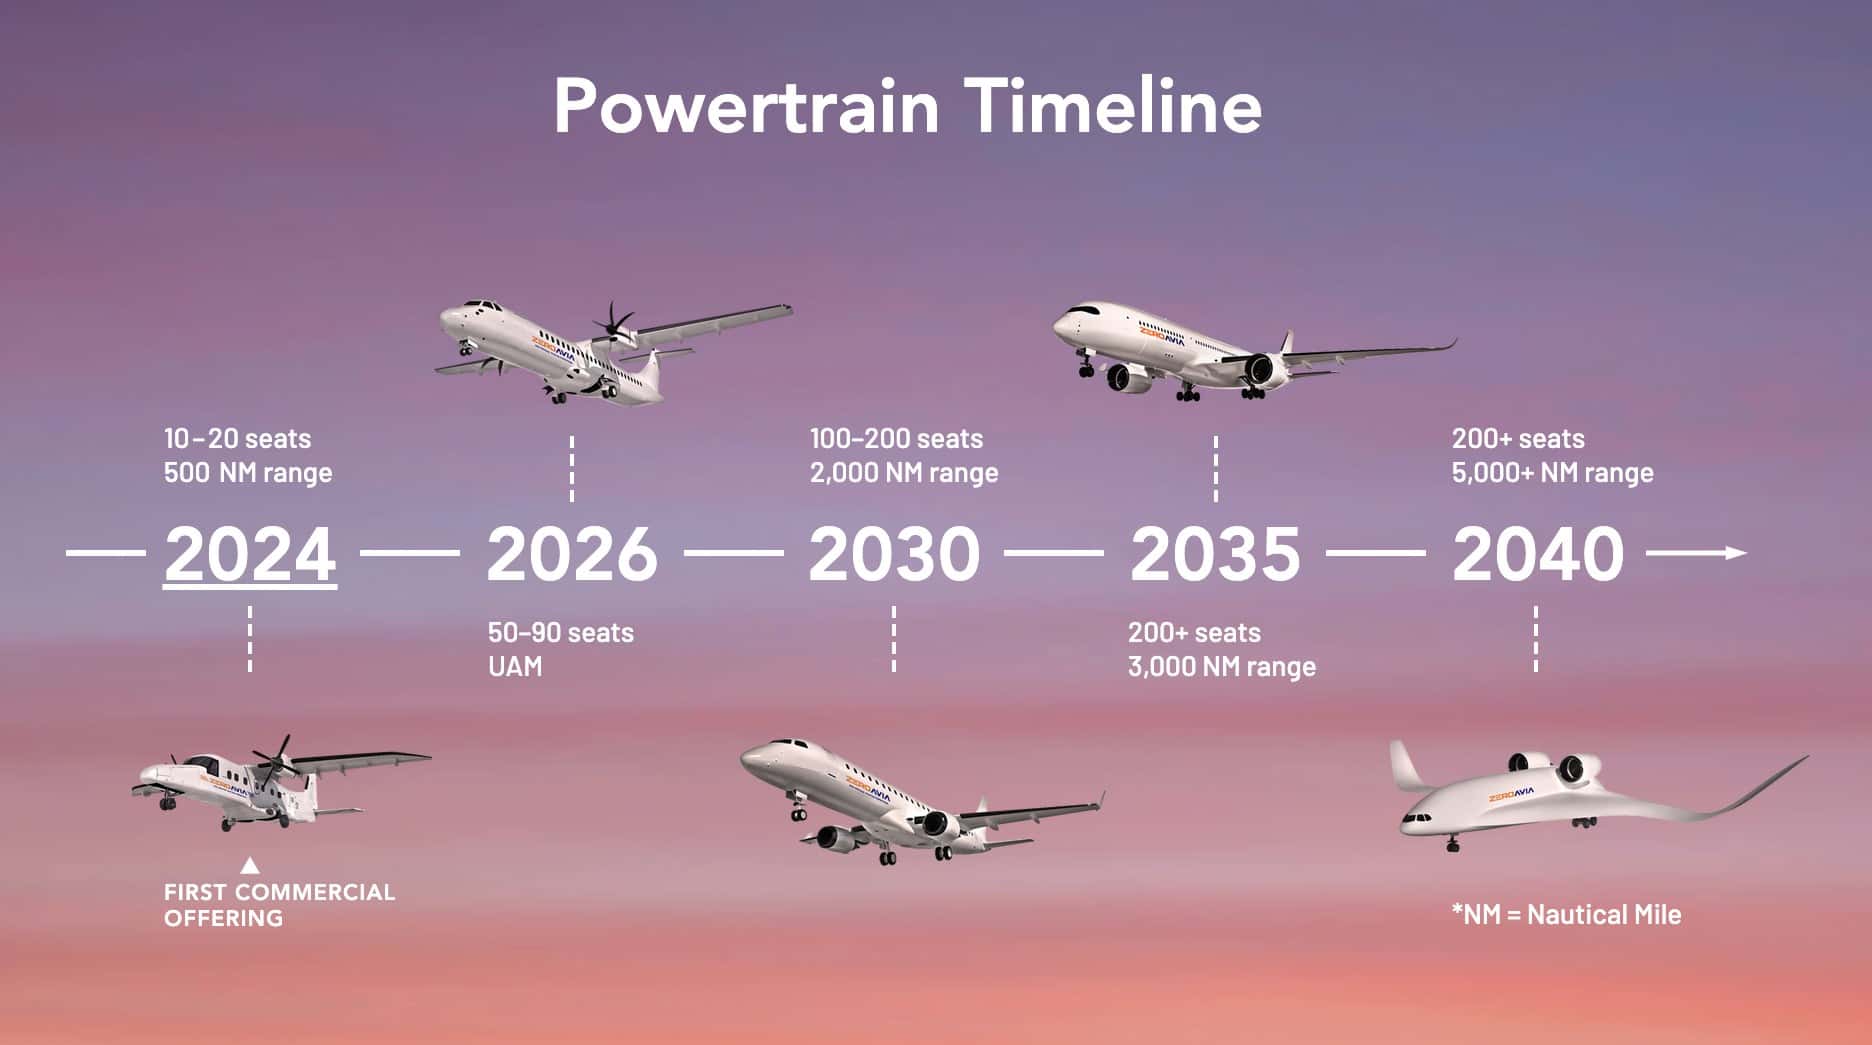 Powertrain Timeline